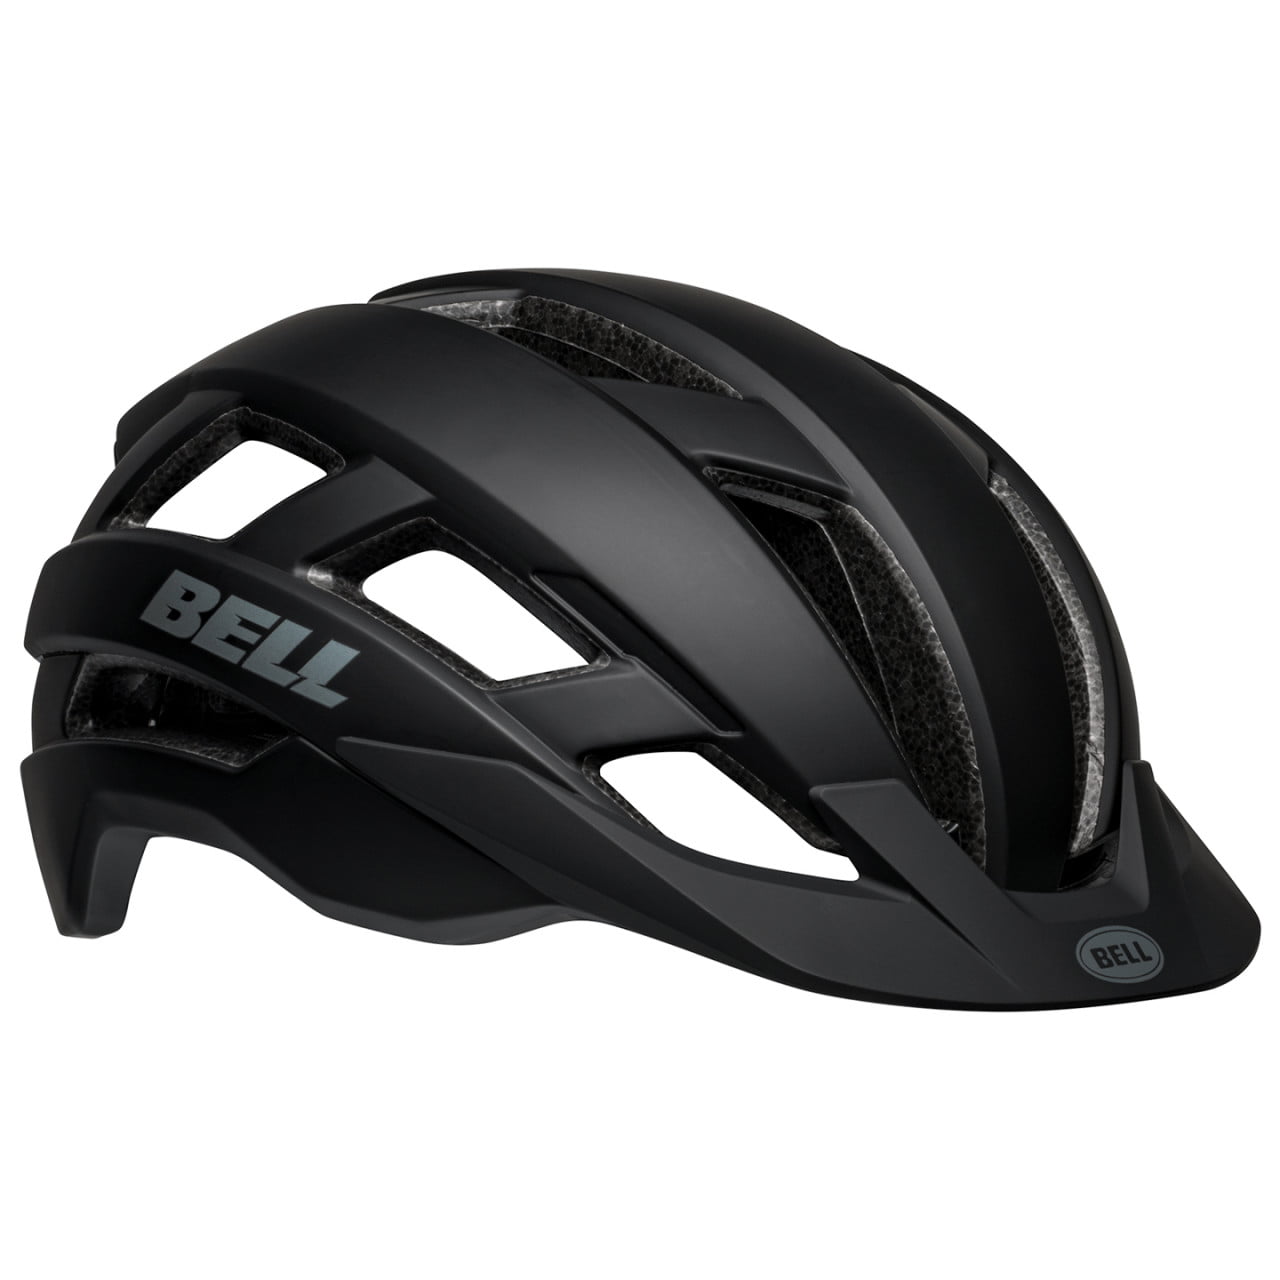 Falcon XRV Mips Cycling Helmet